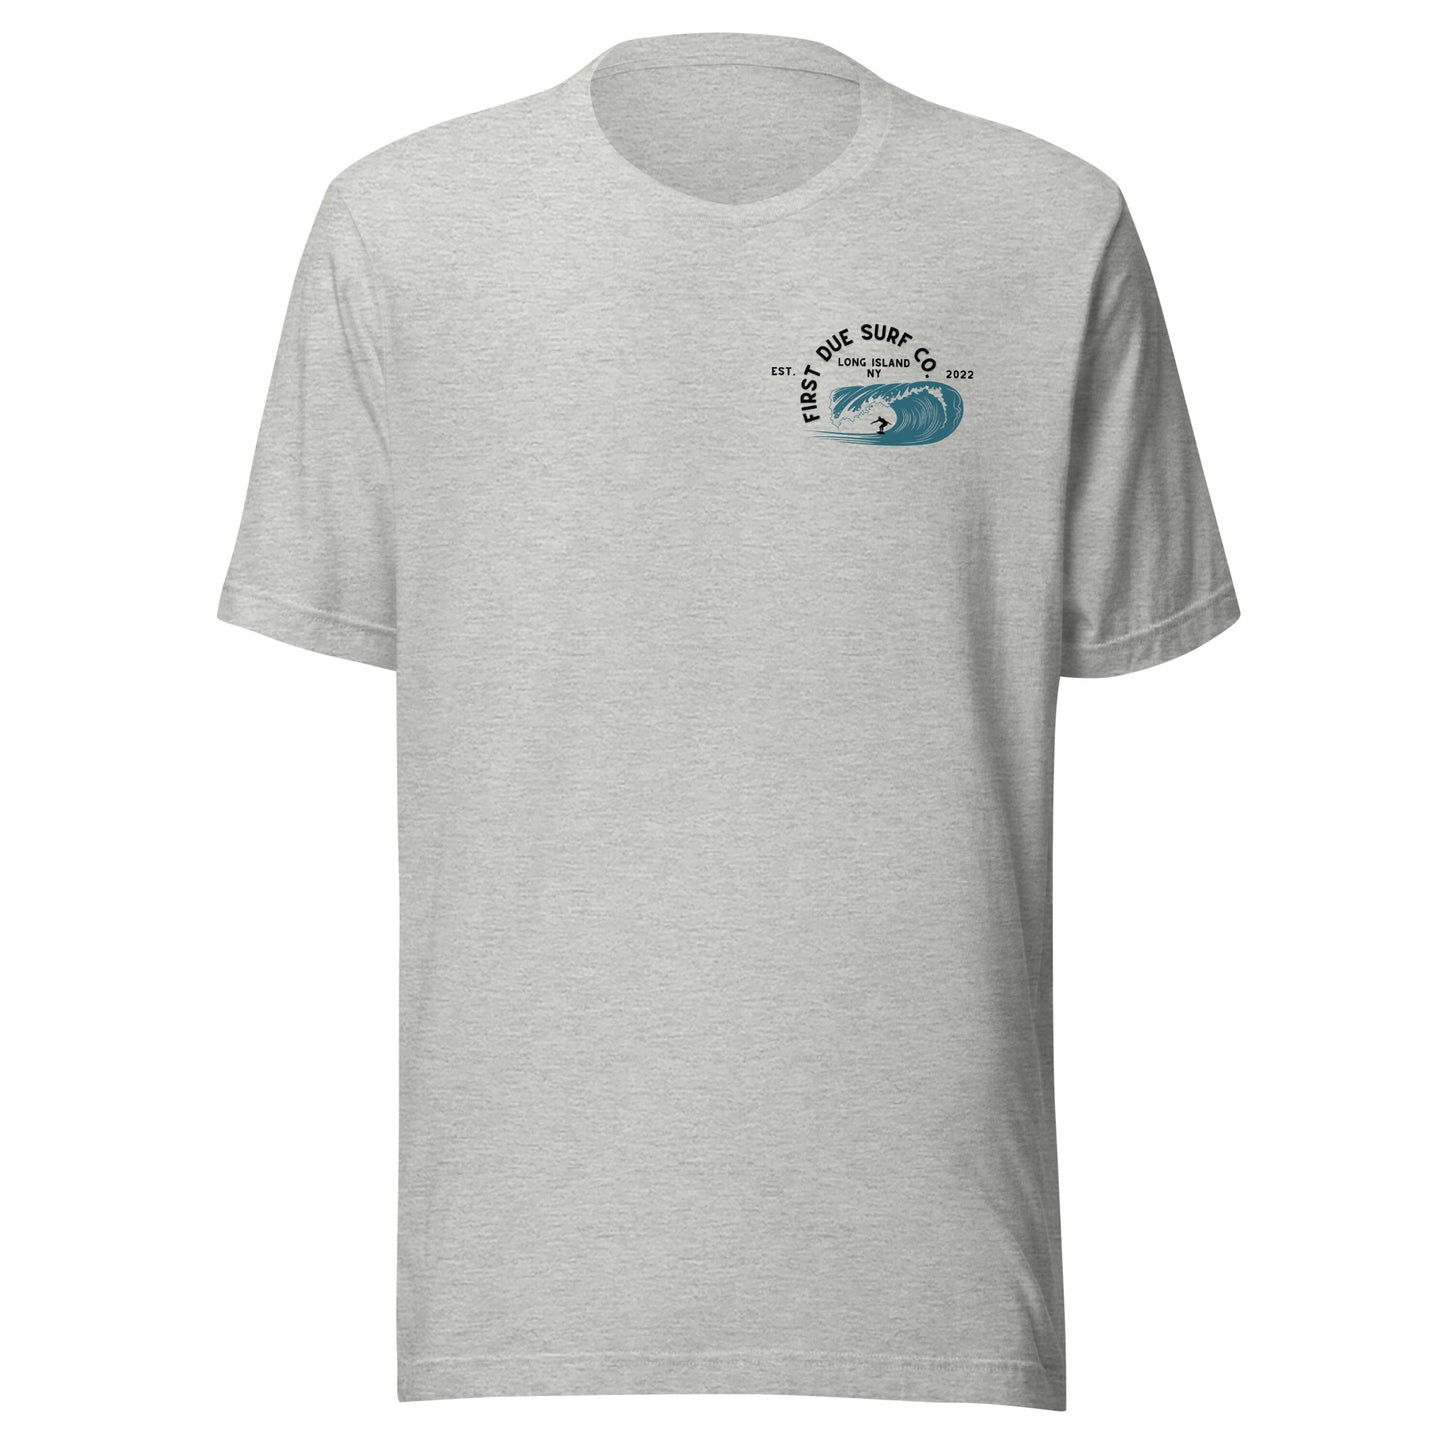 Gilgo Beach T-Shirt